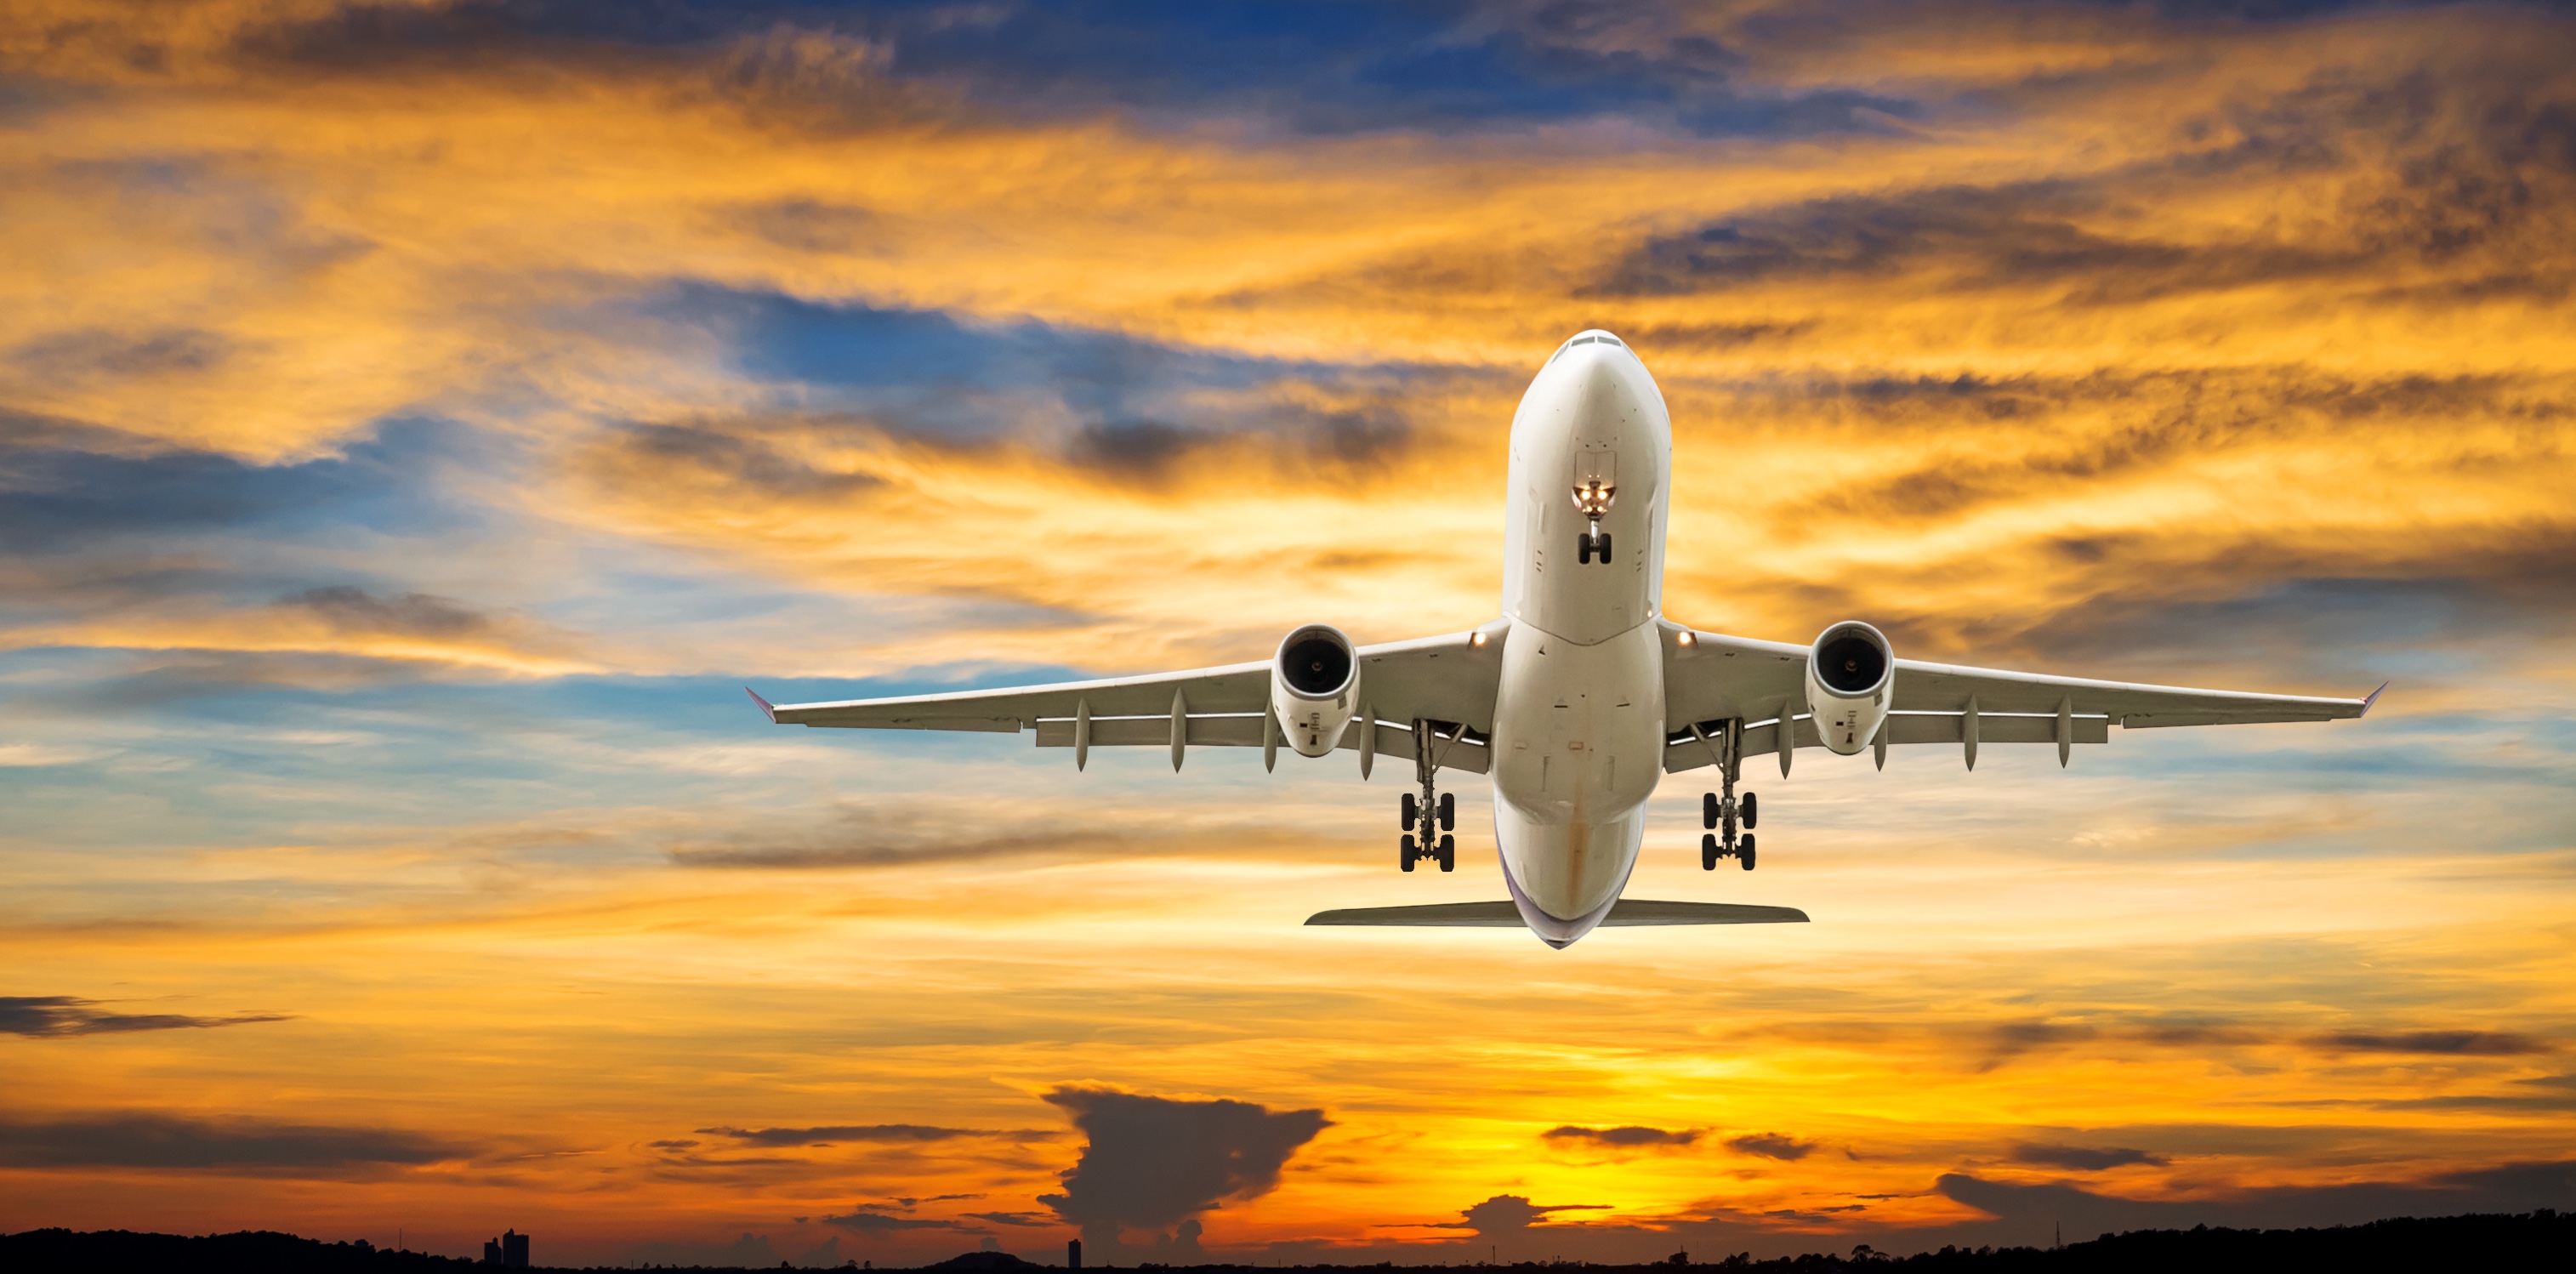 Etsi halvat lennot: Kenn Borek Air